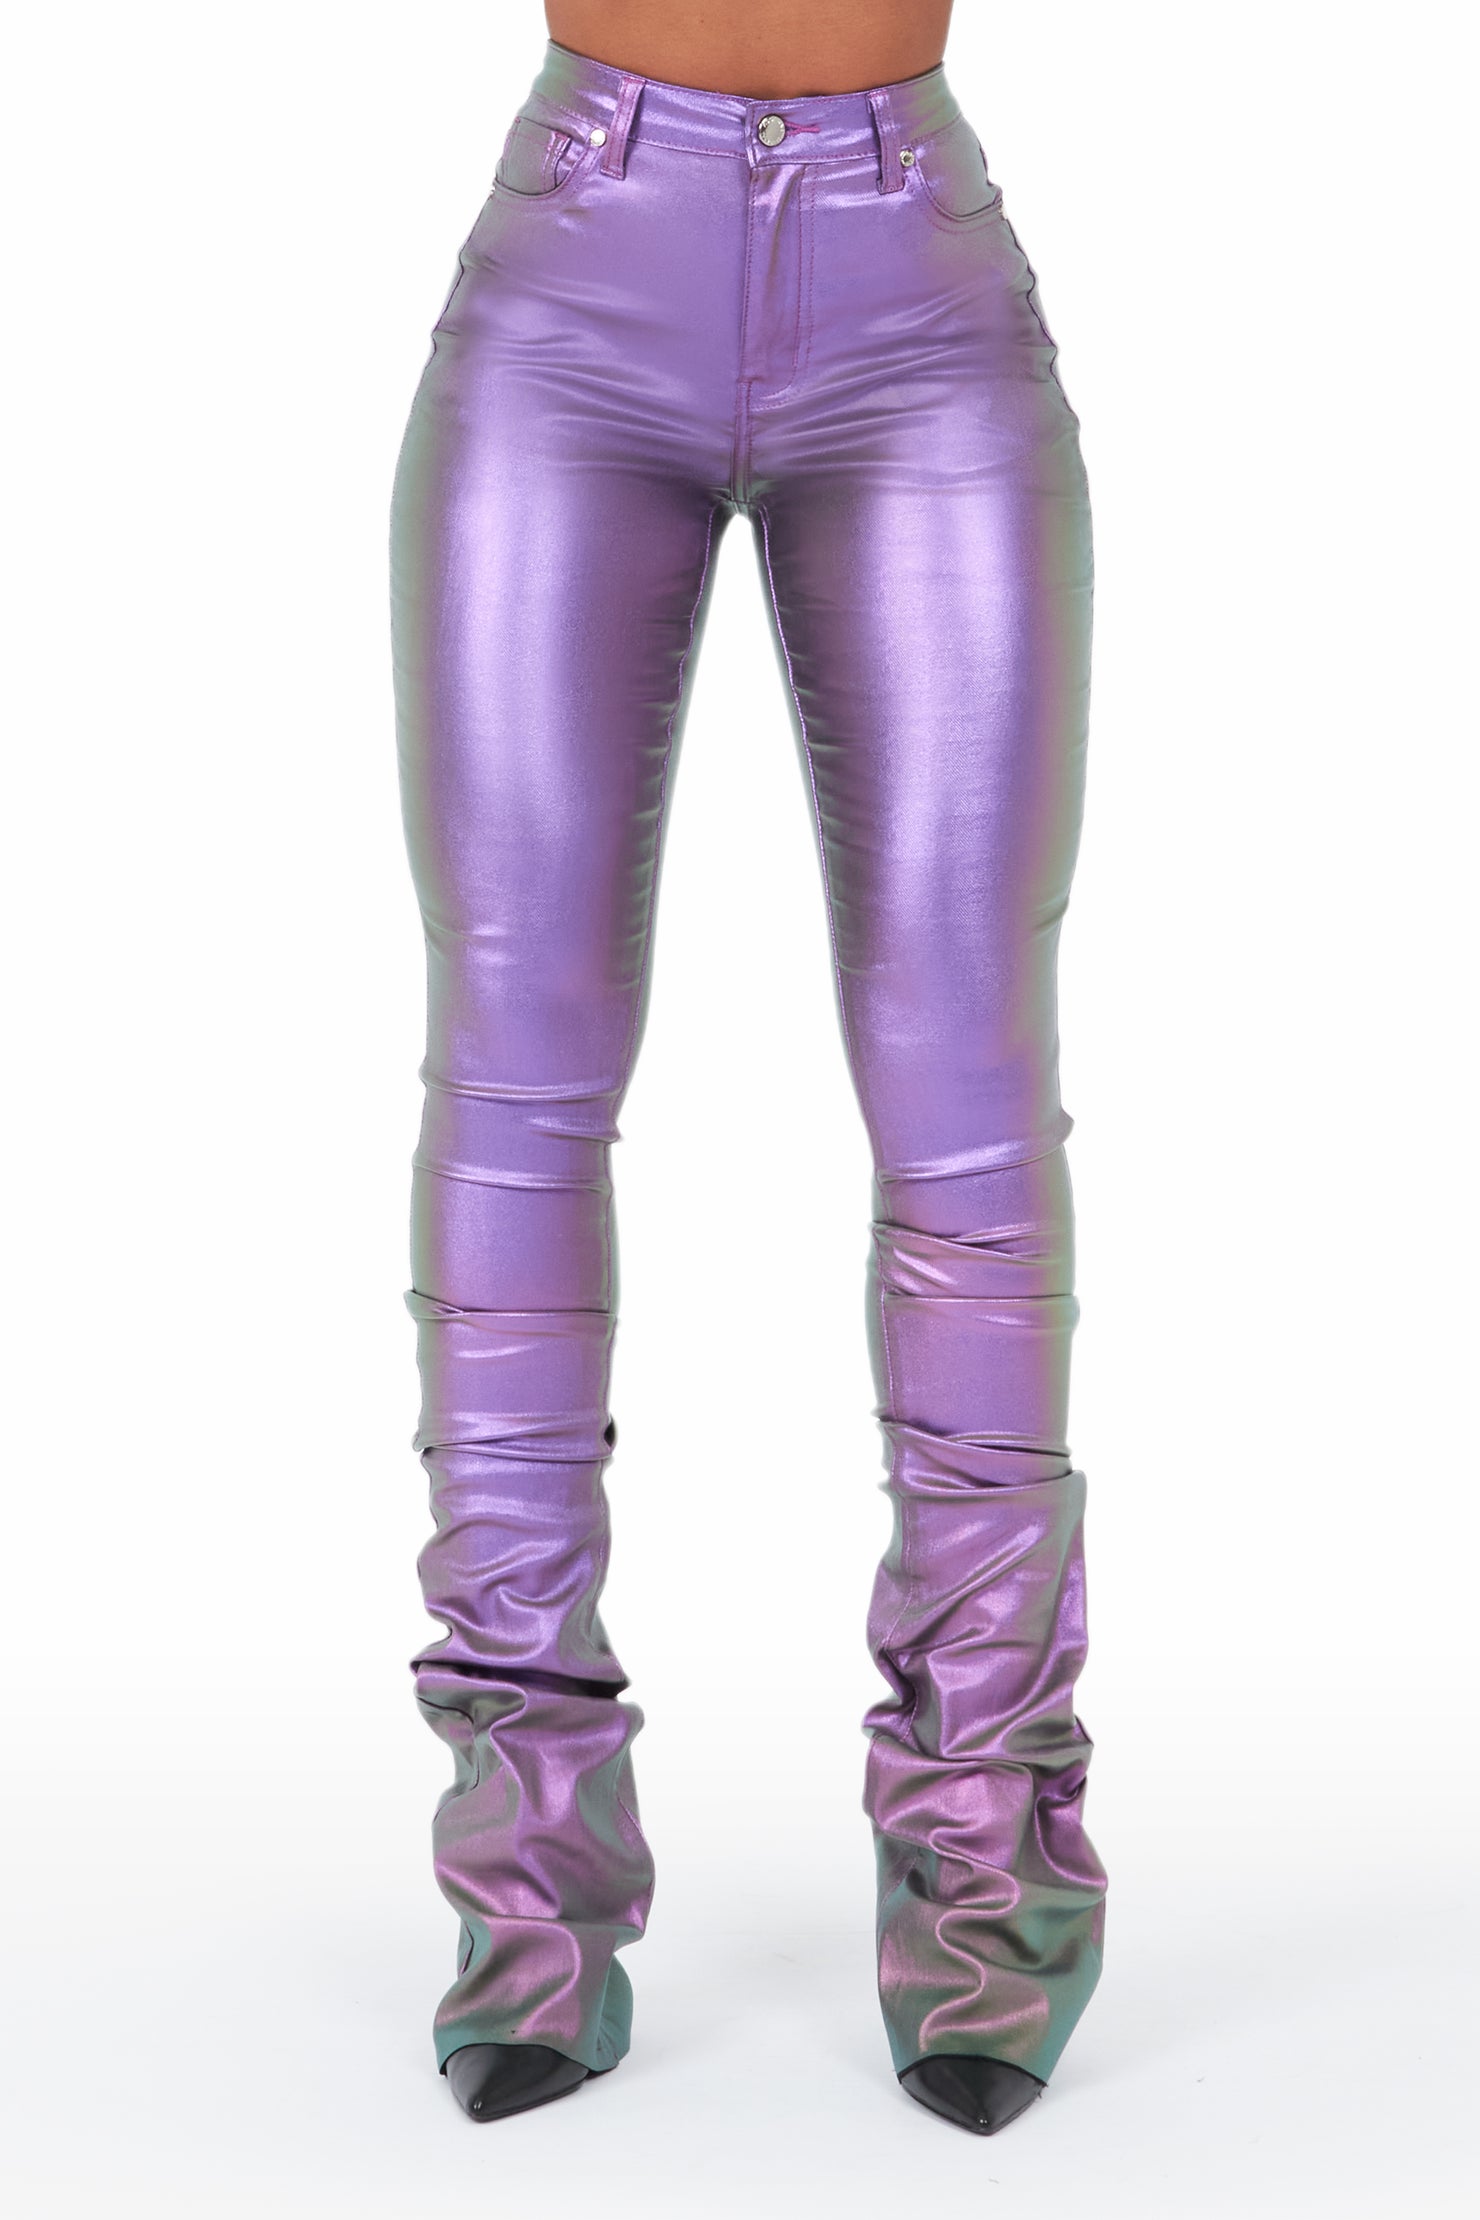 The Drama Metallic Purple PU Super Stacked Pant